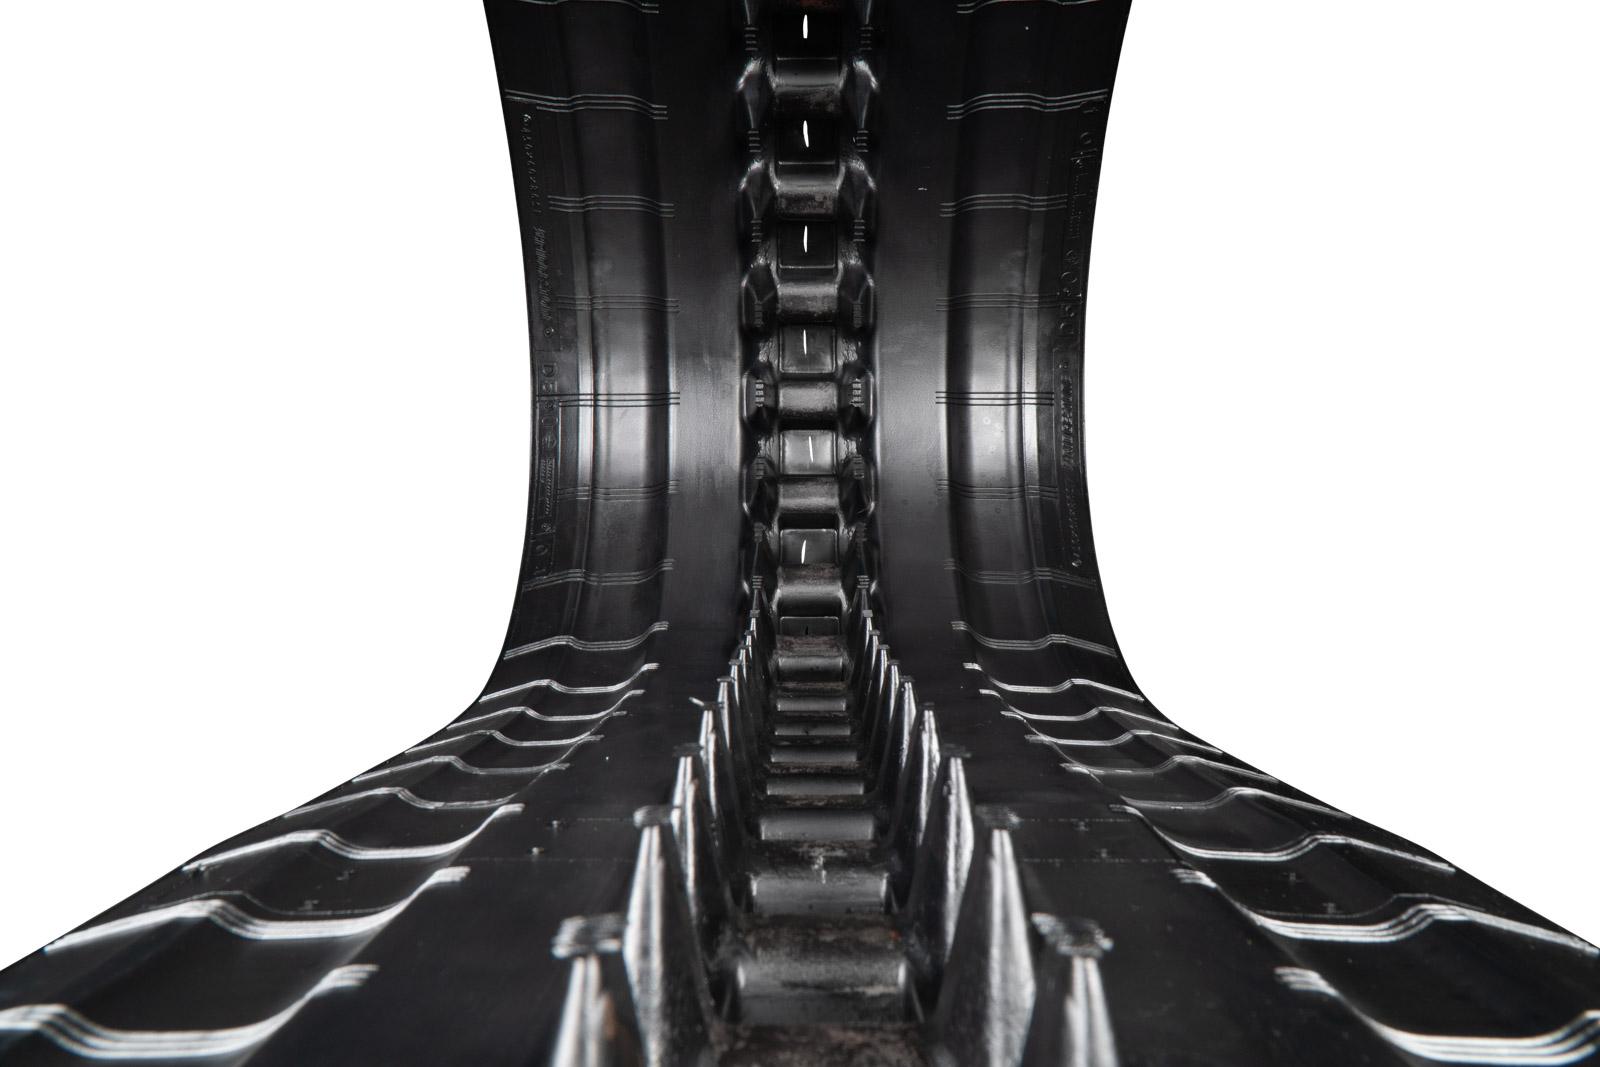 set of 2 18" bridgestone extreme duty multi bar pattern rubber tracks (450x86mbx56)